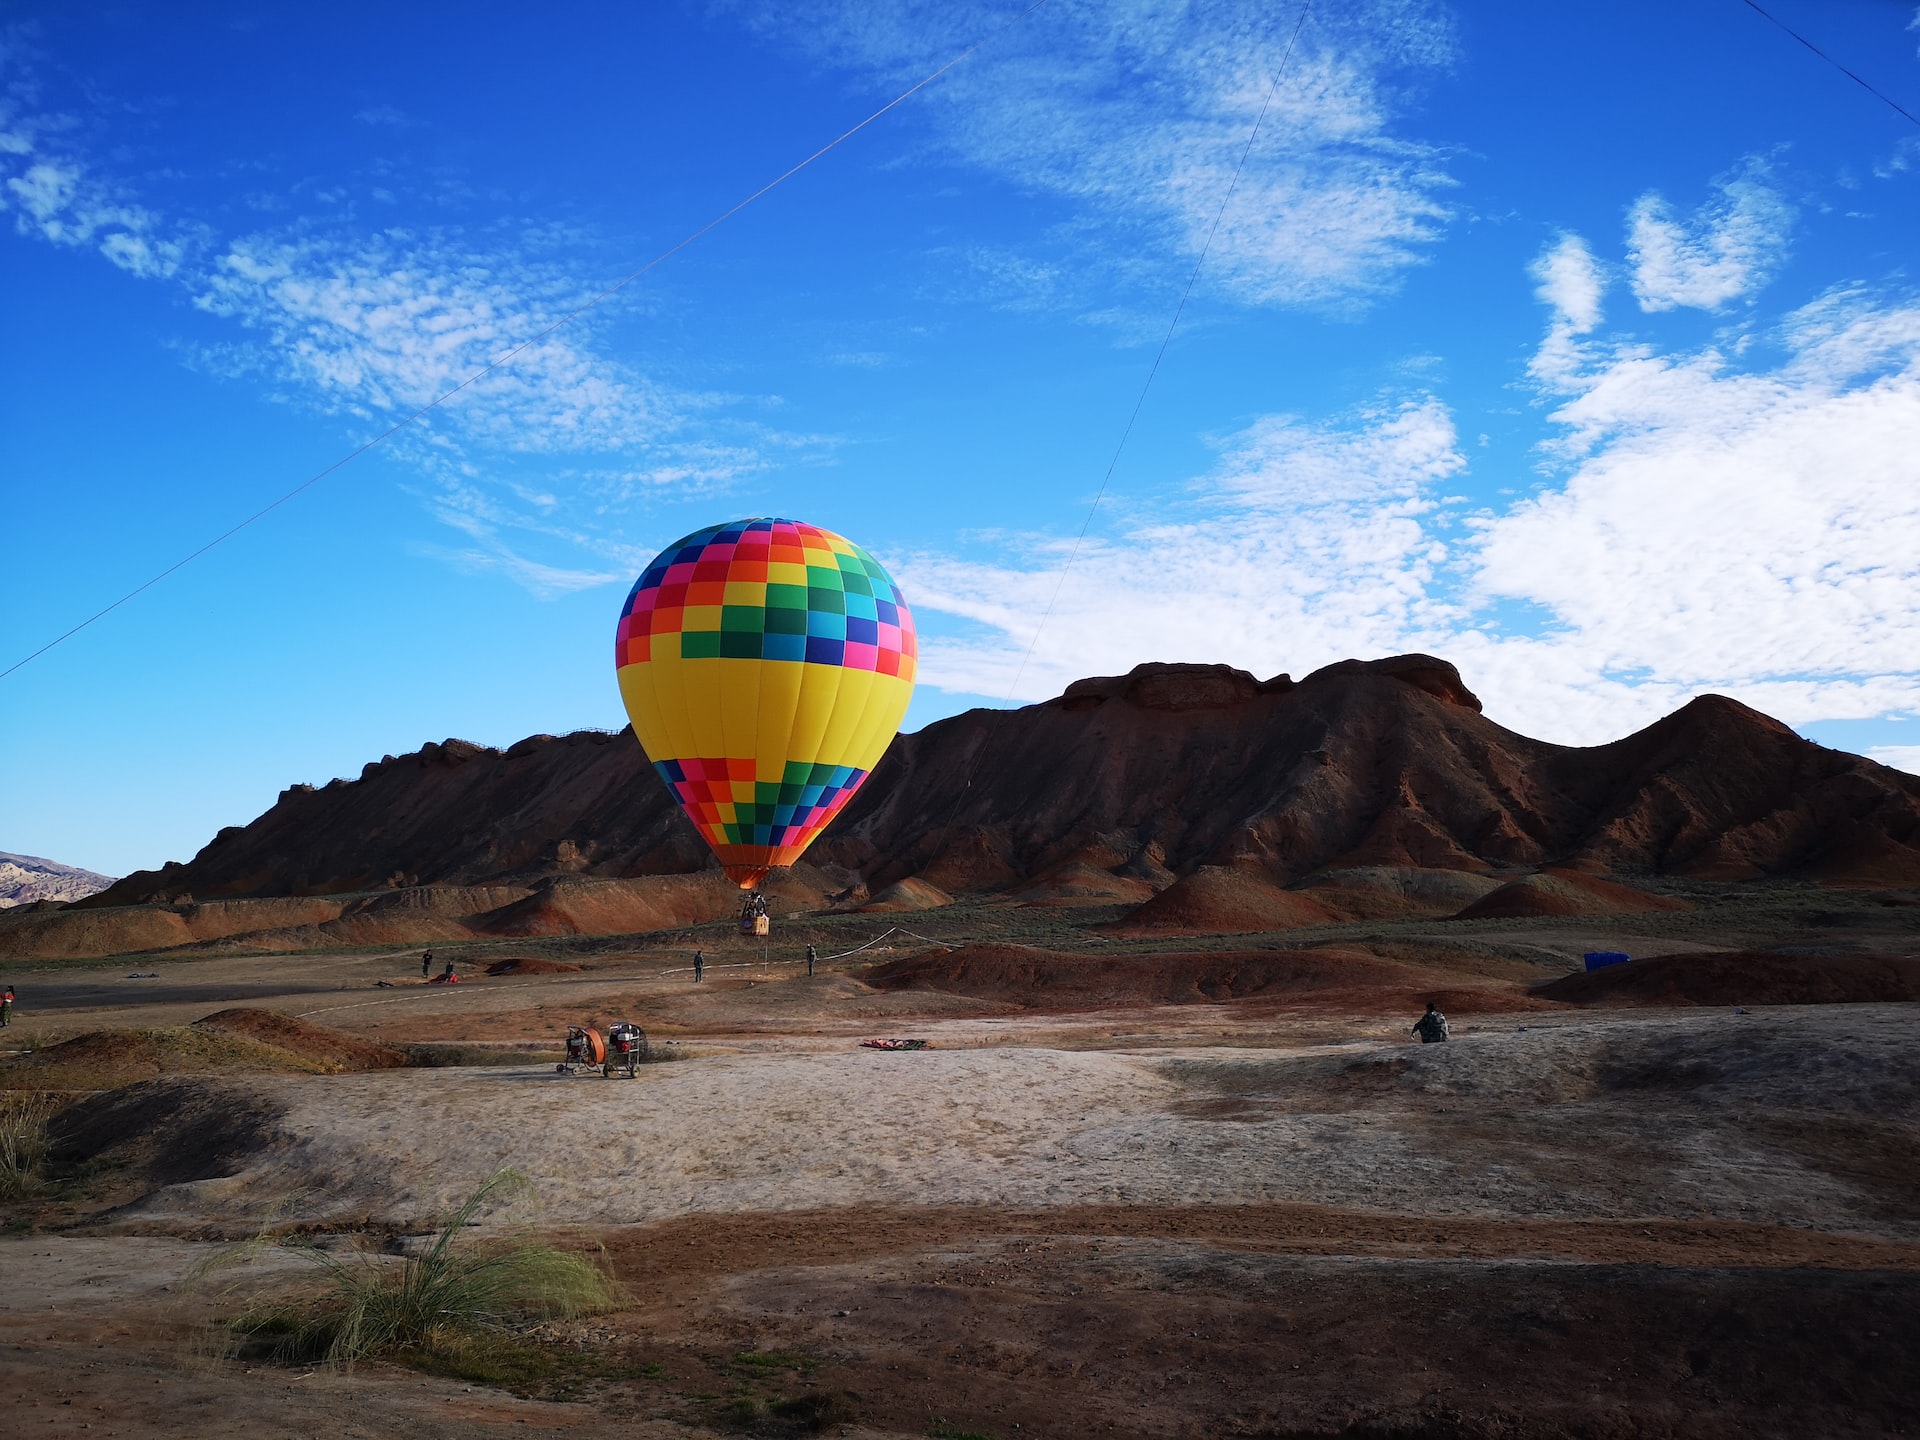 Wadi Rum Camping- Hot Air Balloon in the desert